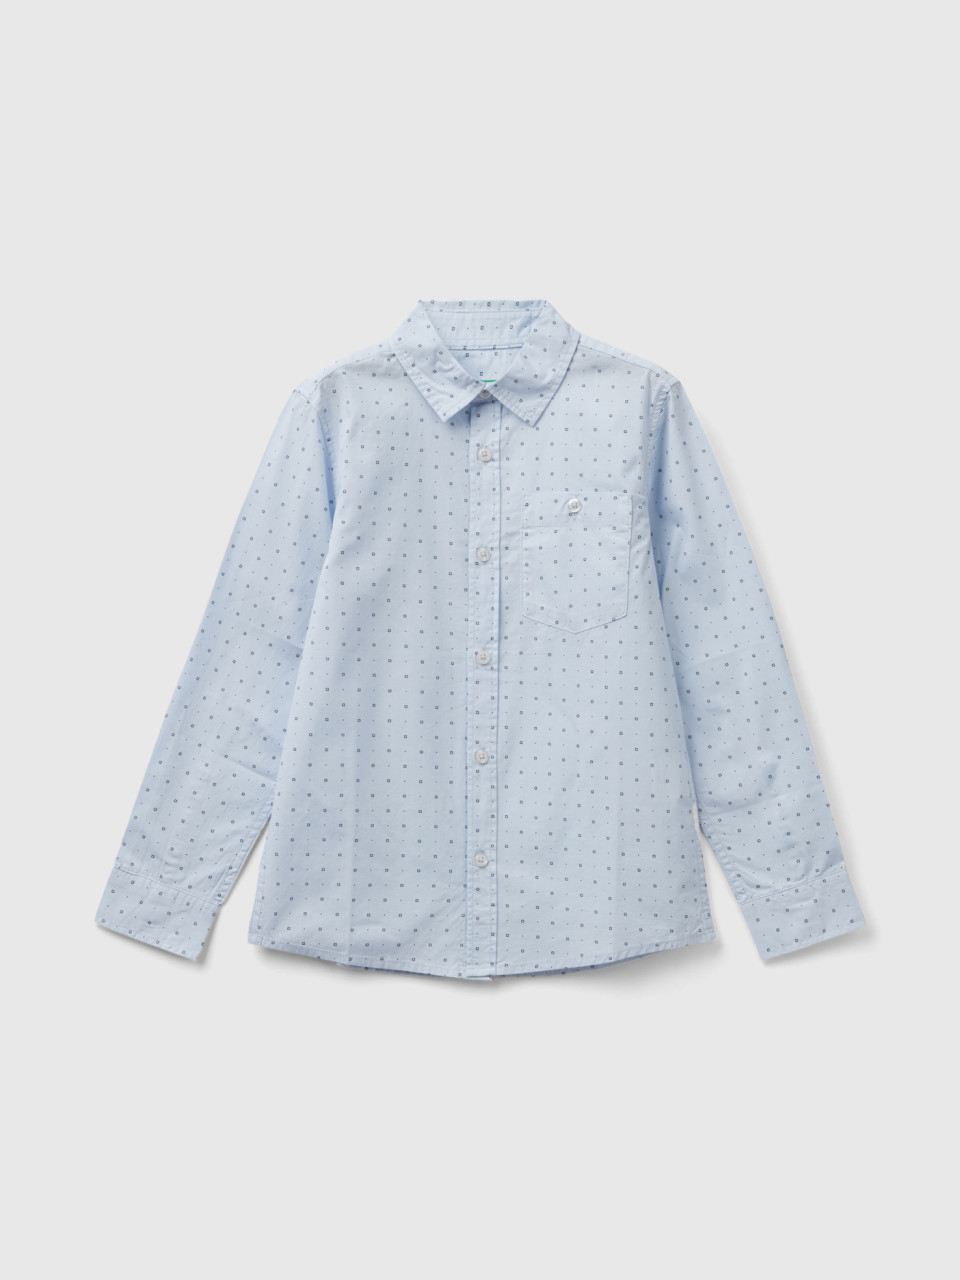 Benetton, Micro Pattern Shirt, Sky Blue, Kids